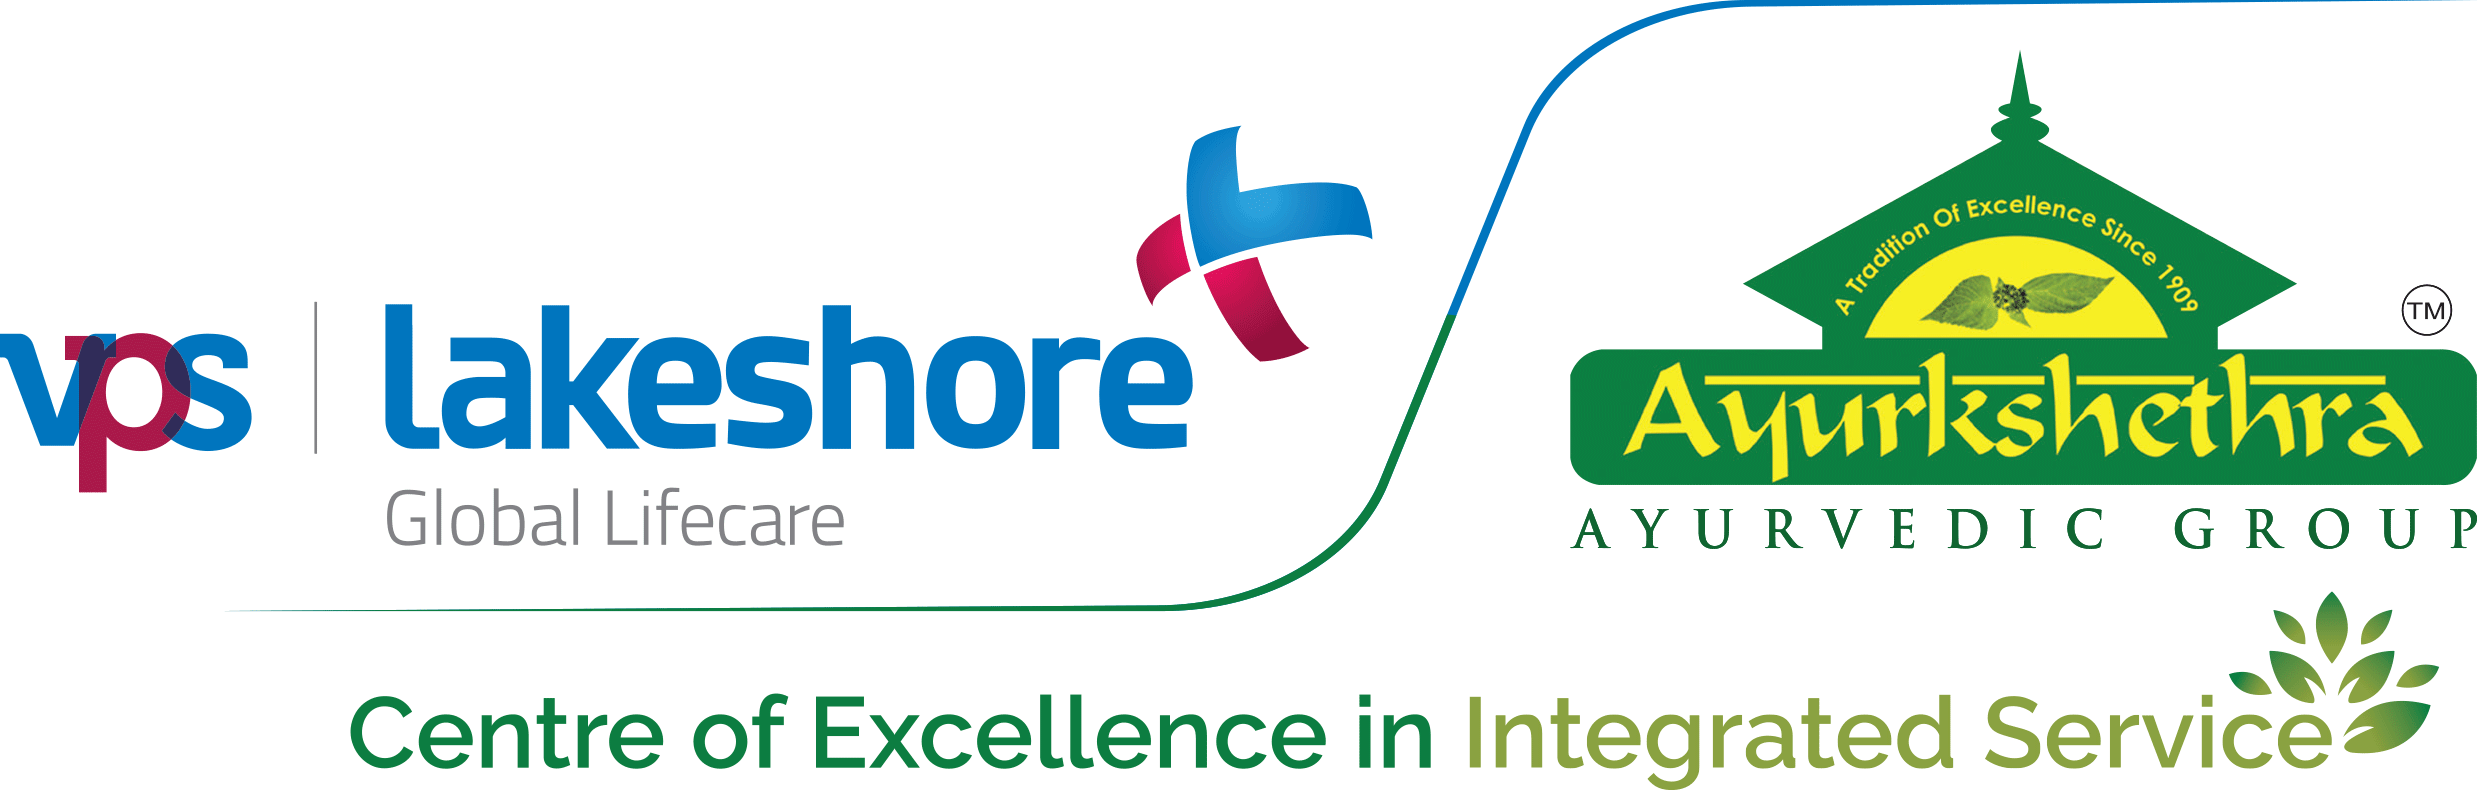 VPS Lakeshore Logo